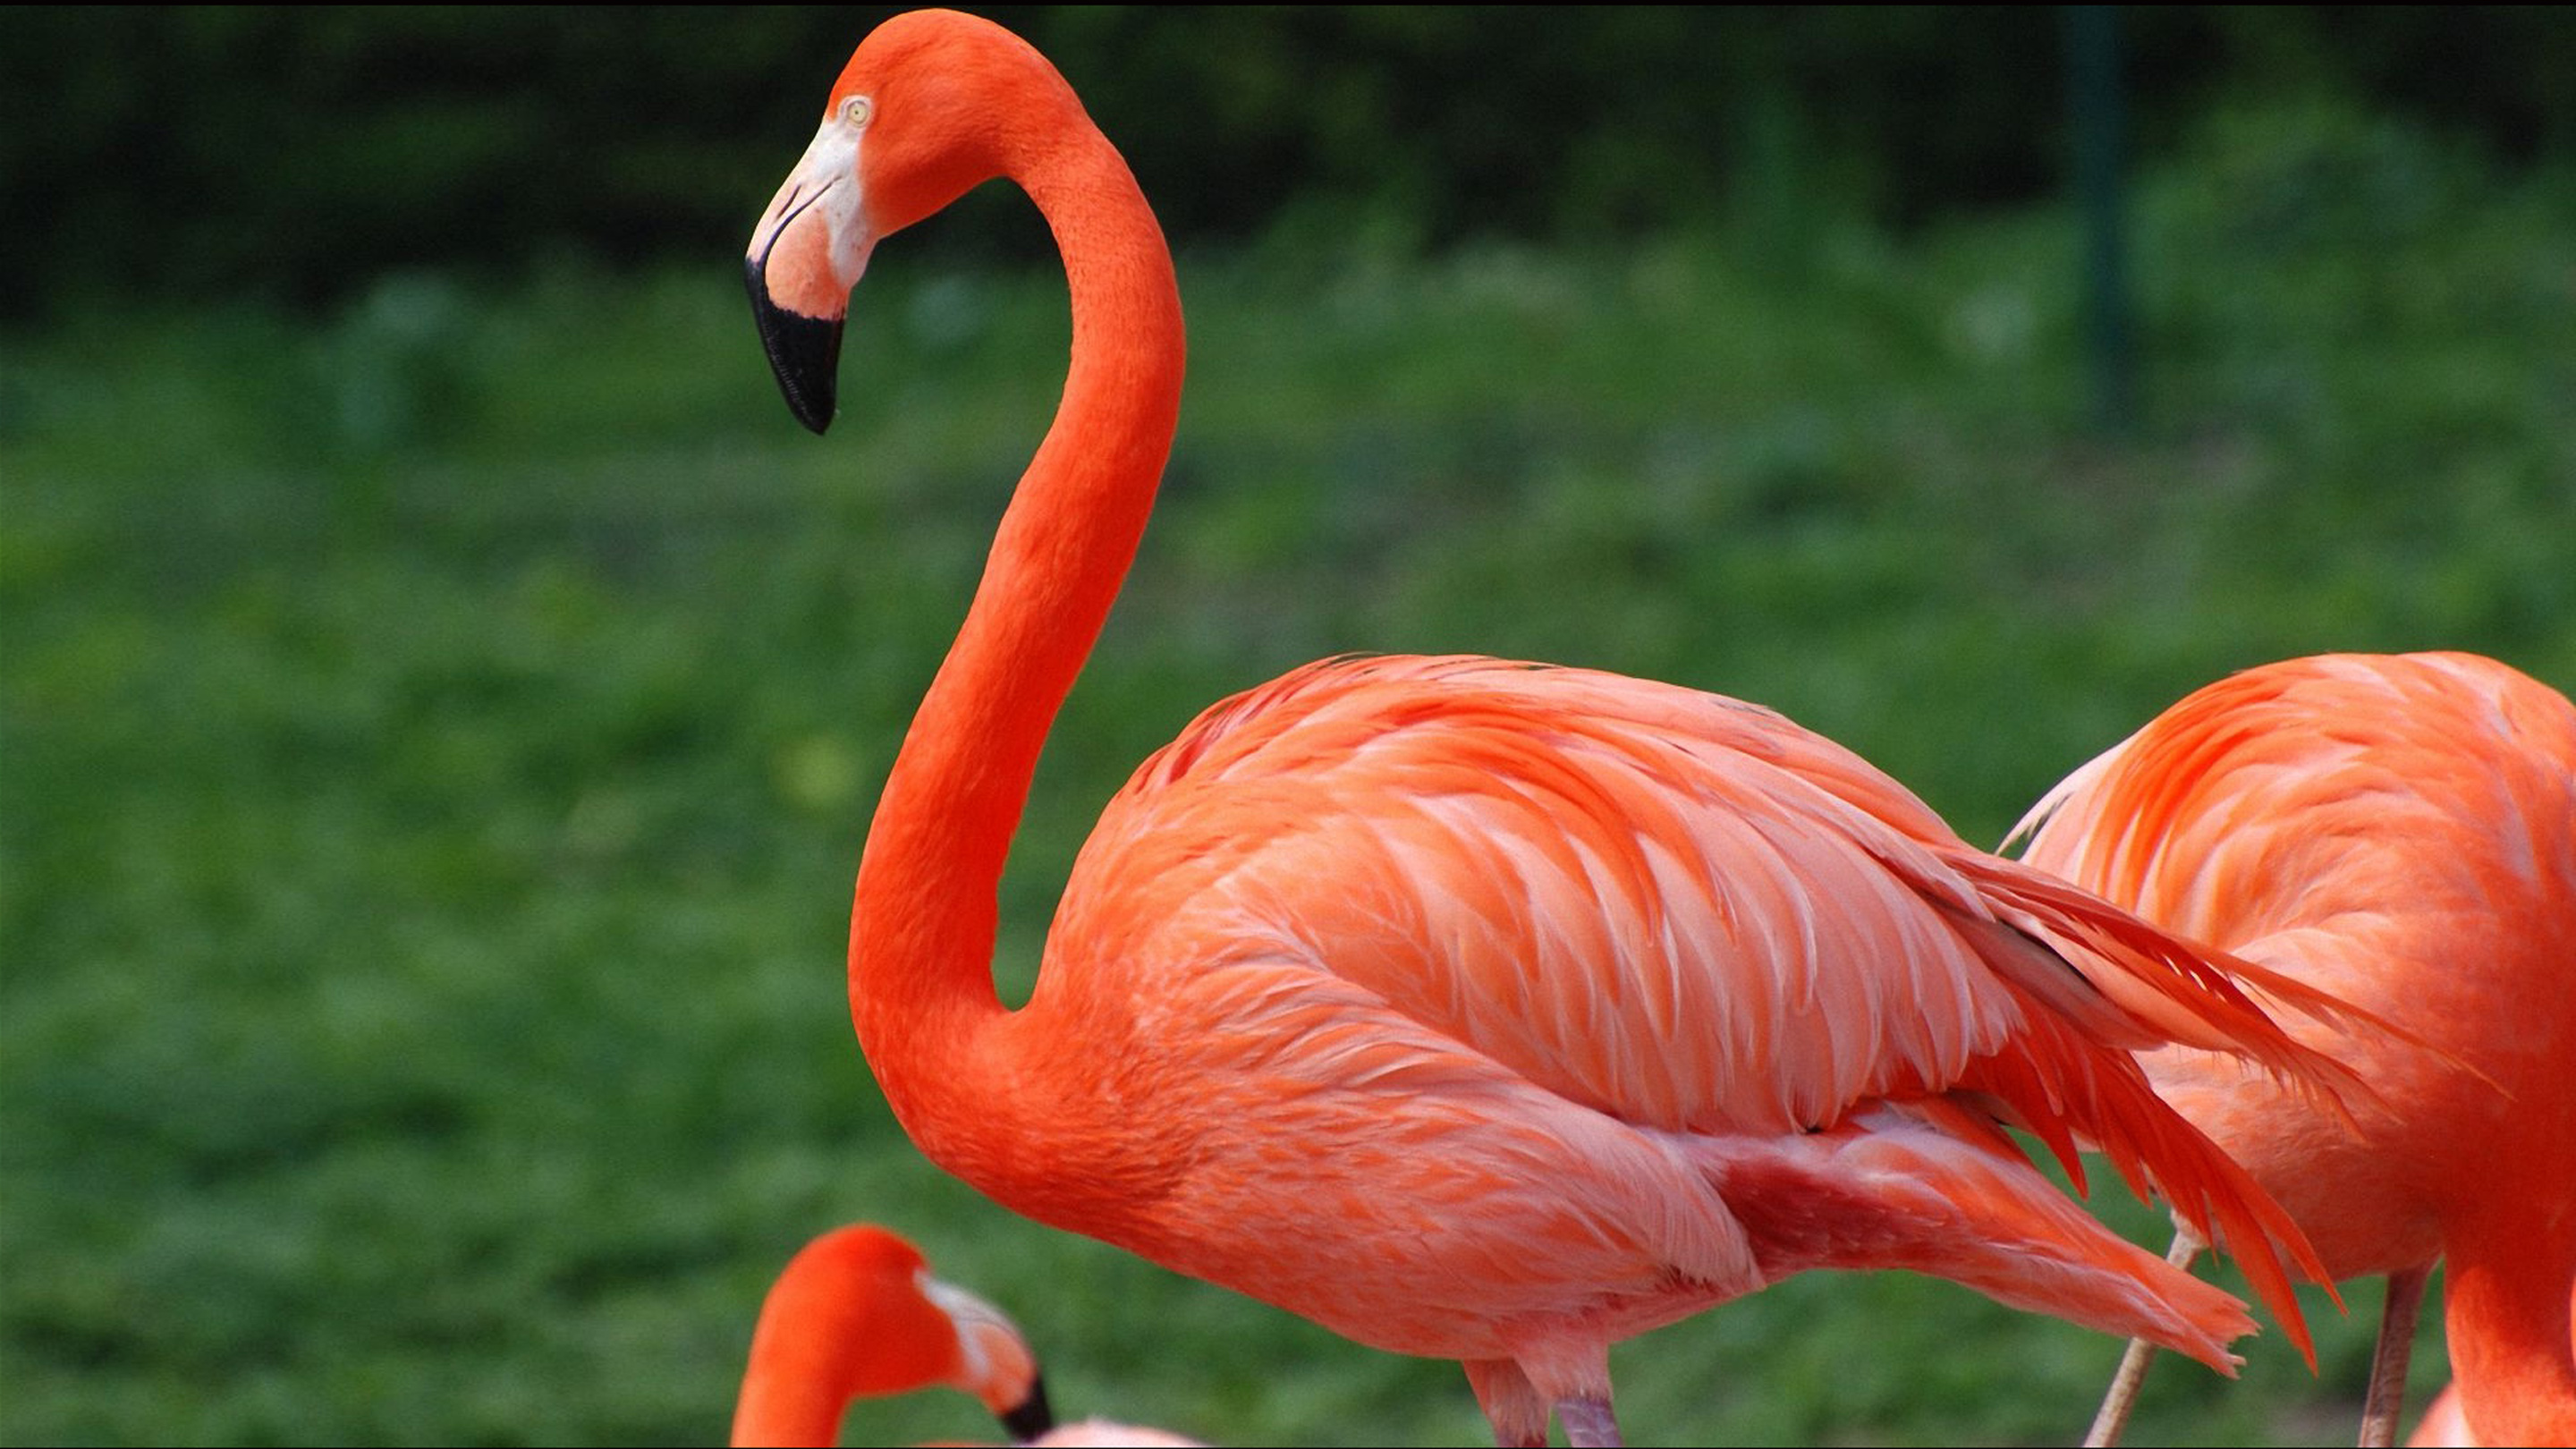 Red Flamingo Desktop Wallpaper Hd For Mobile Phones And Laptop ...